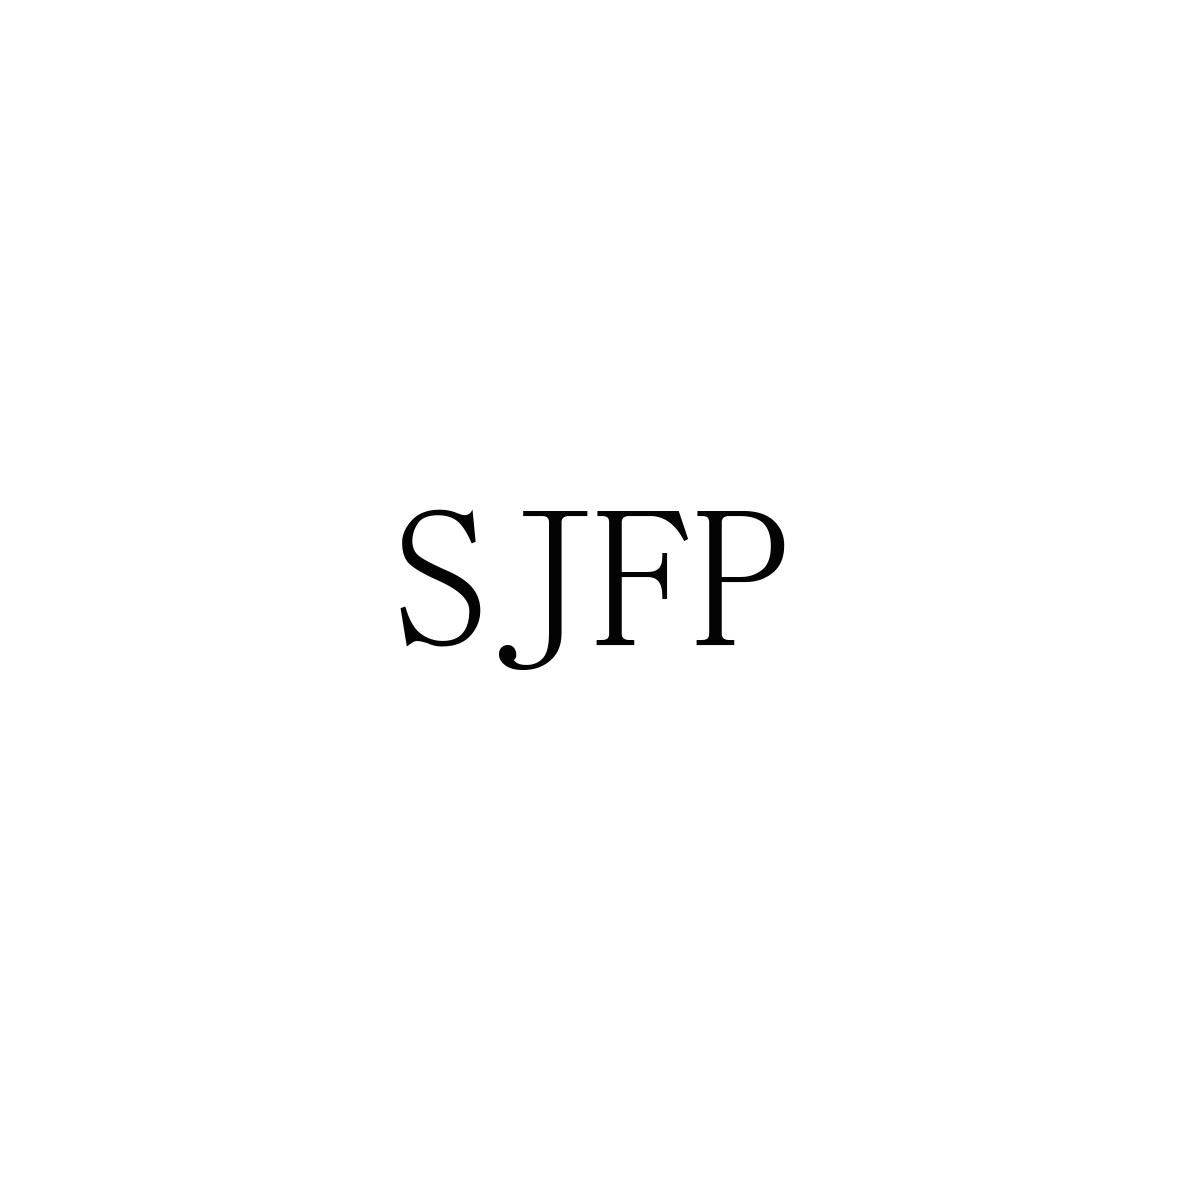 SJFP